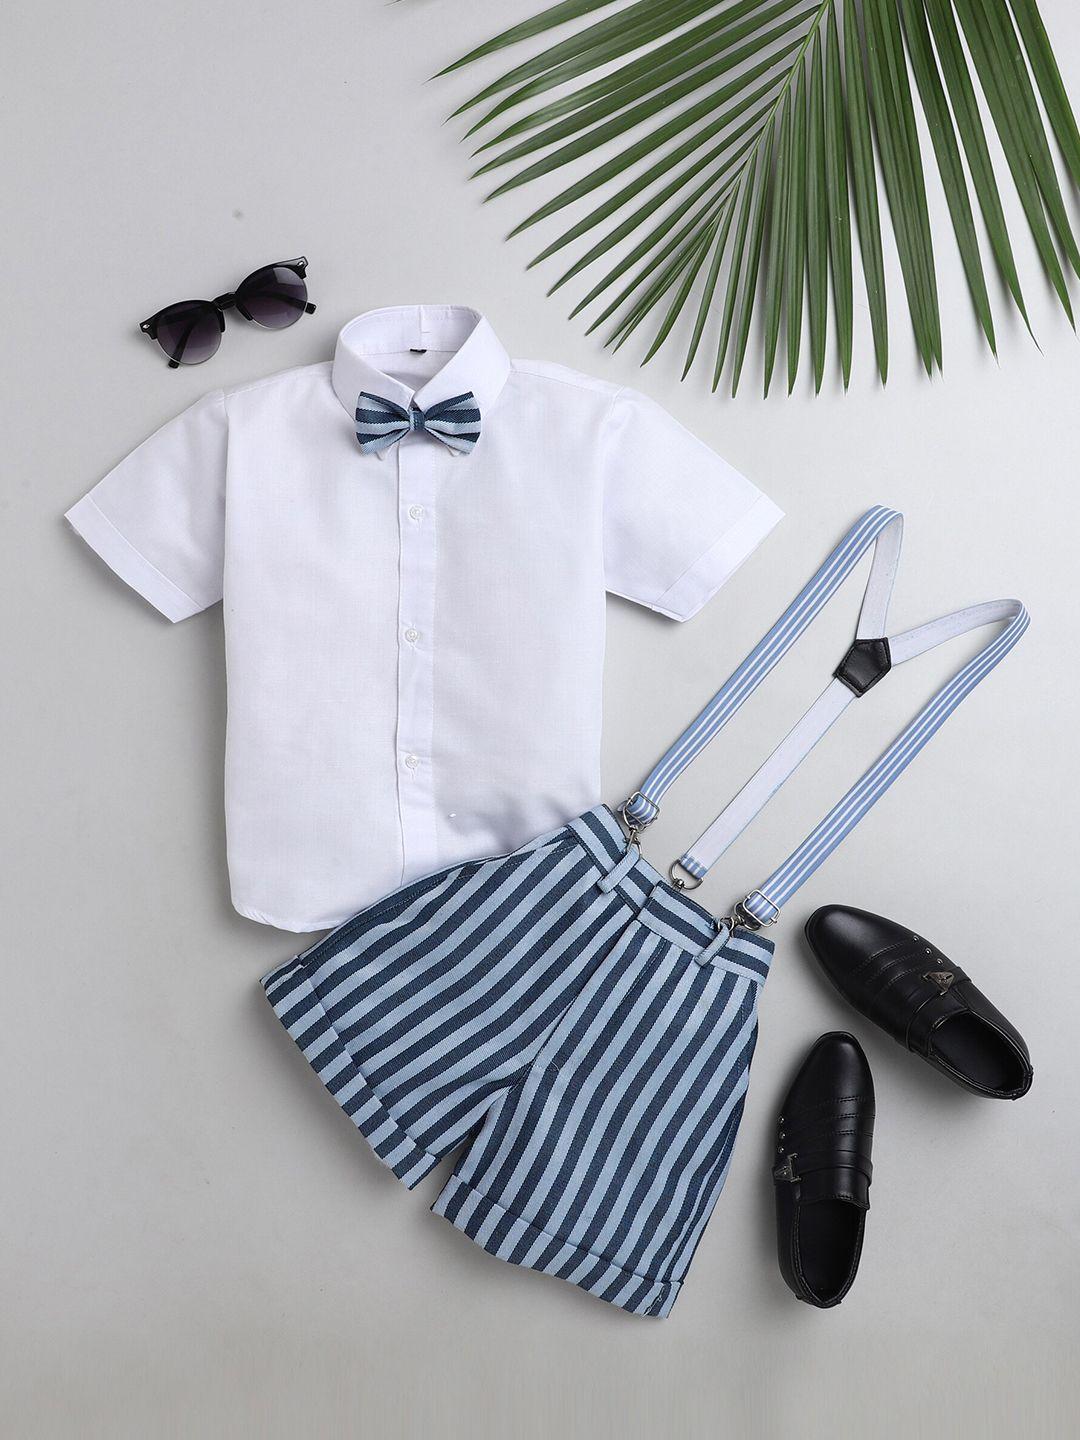 jeetethnics boys blue & white shirt & shorts with suspenders